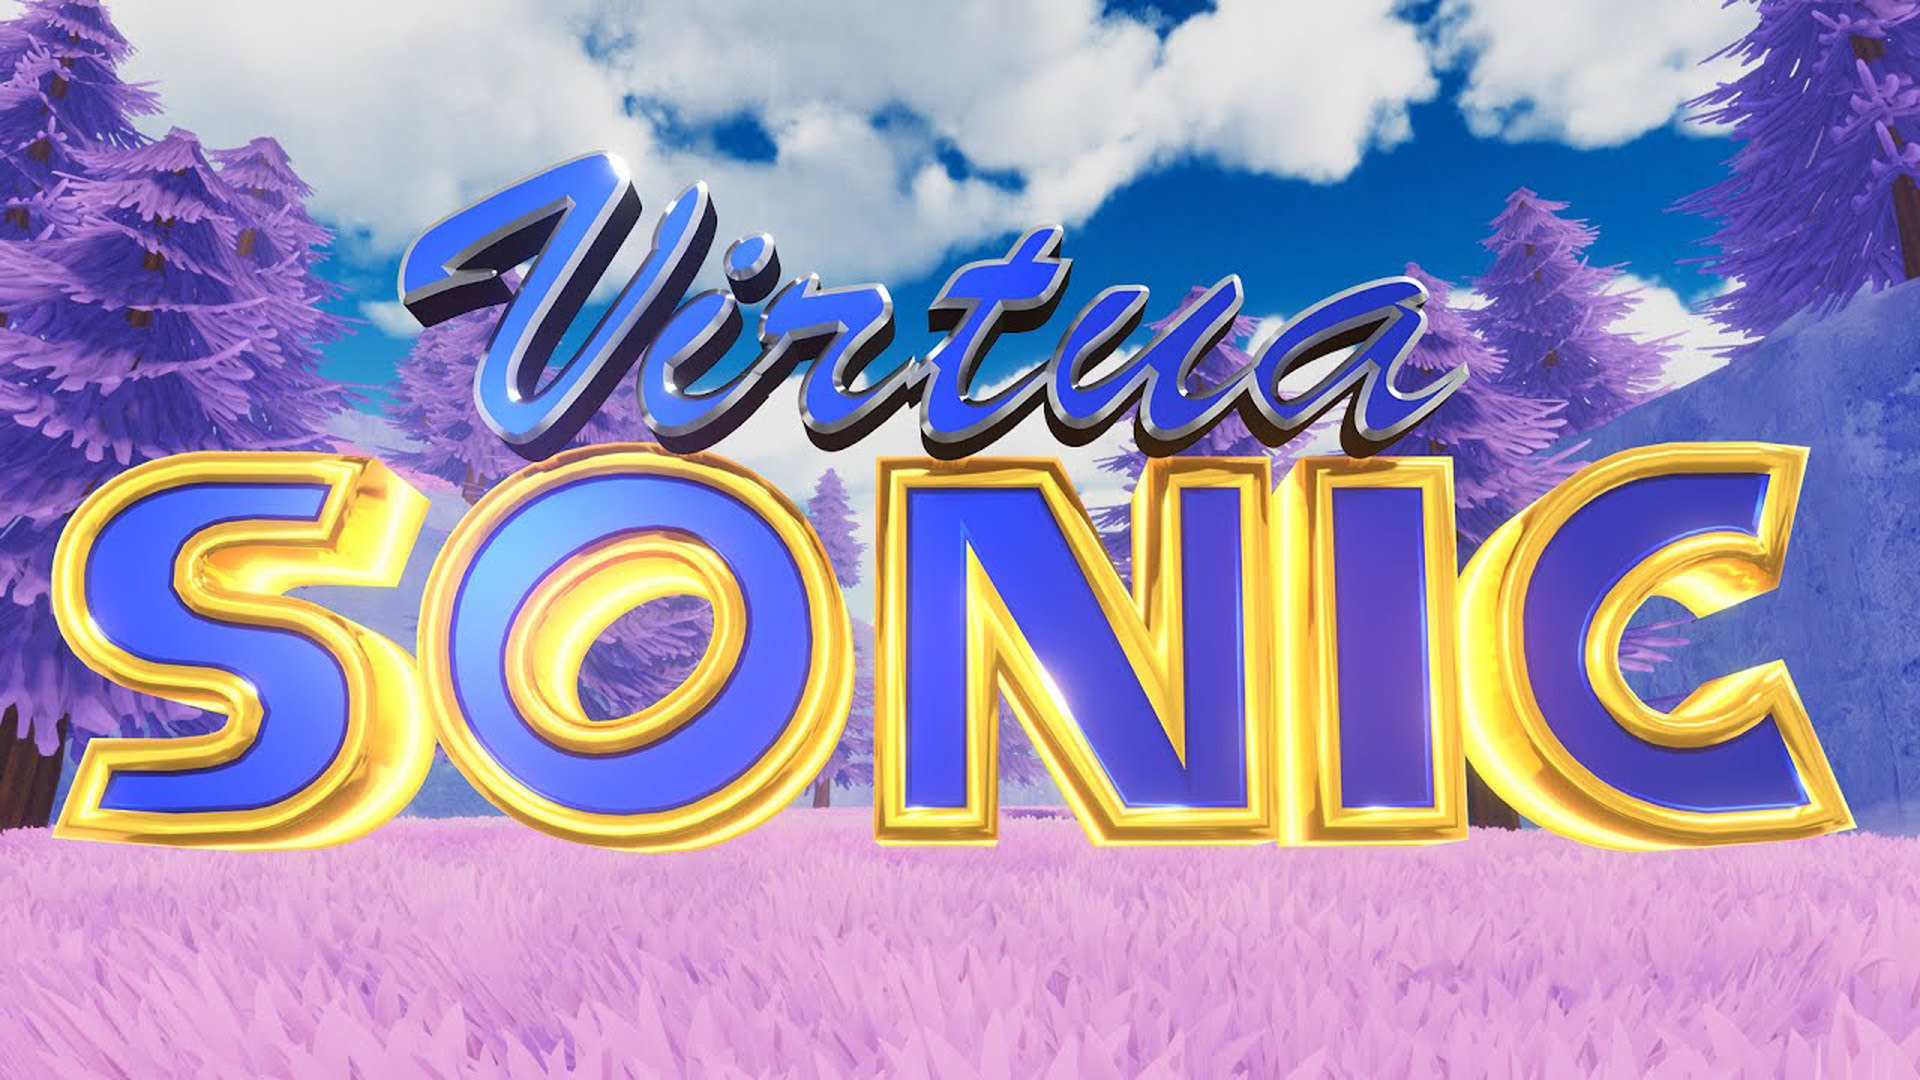 Sonic 2 VR - VR fan game 